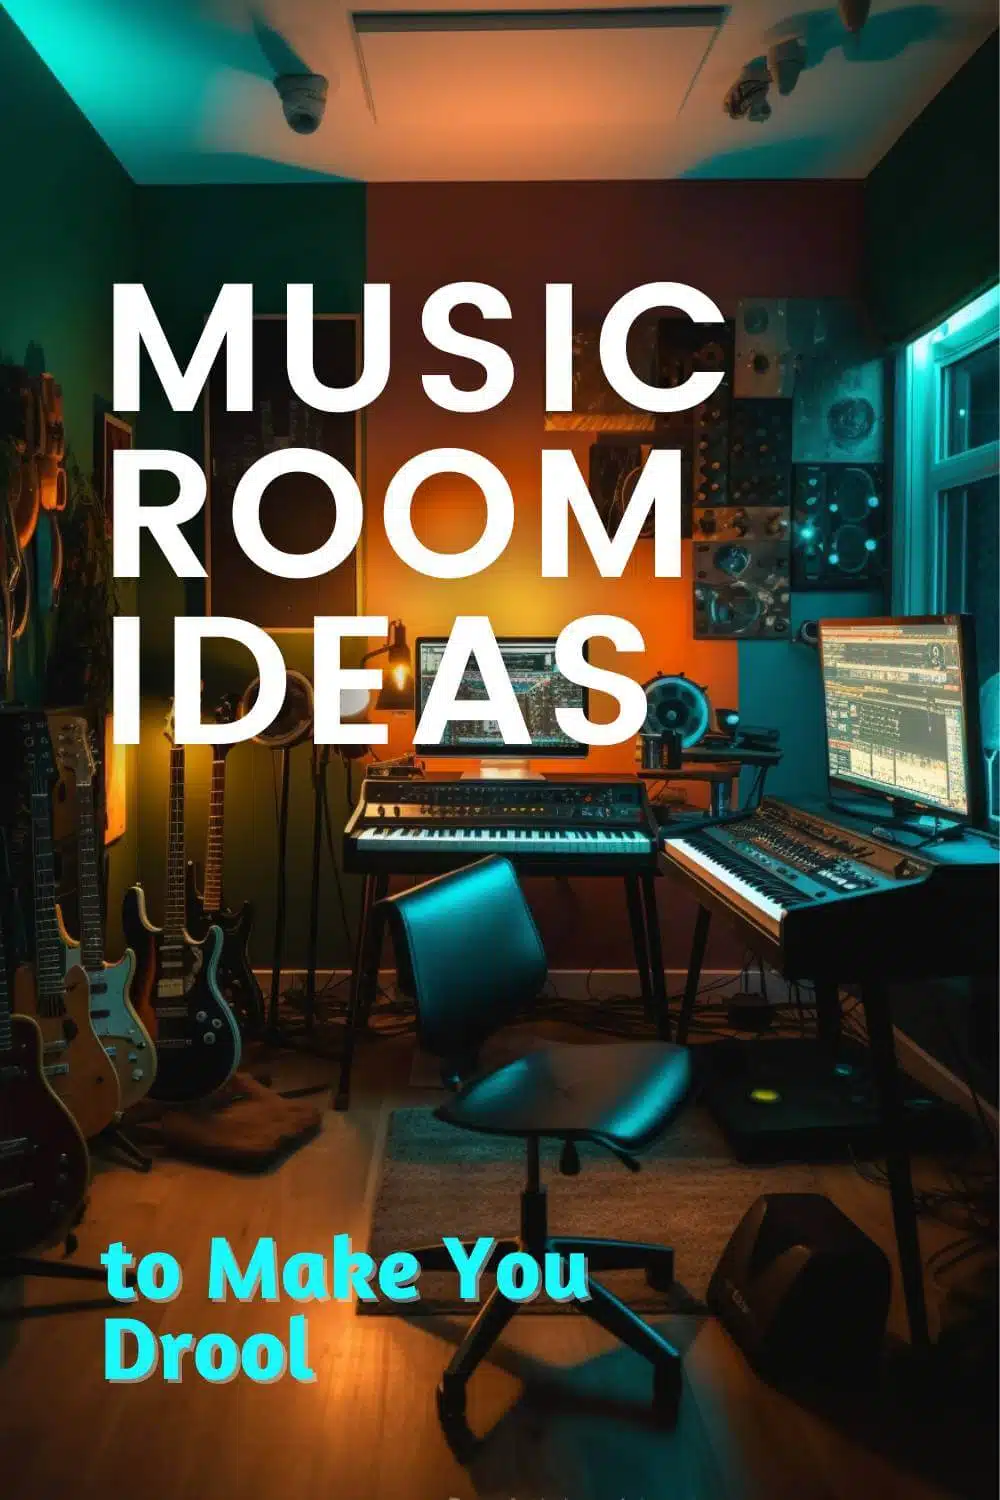 18 music room ideas tech aesthetic , recording studio, Music Room Decor, Home Music Room Design, small recording studio, music room, music aesthetic, pinterest pin